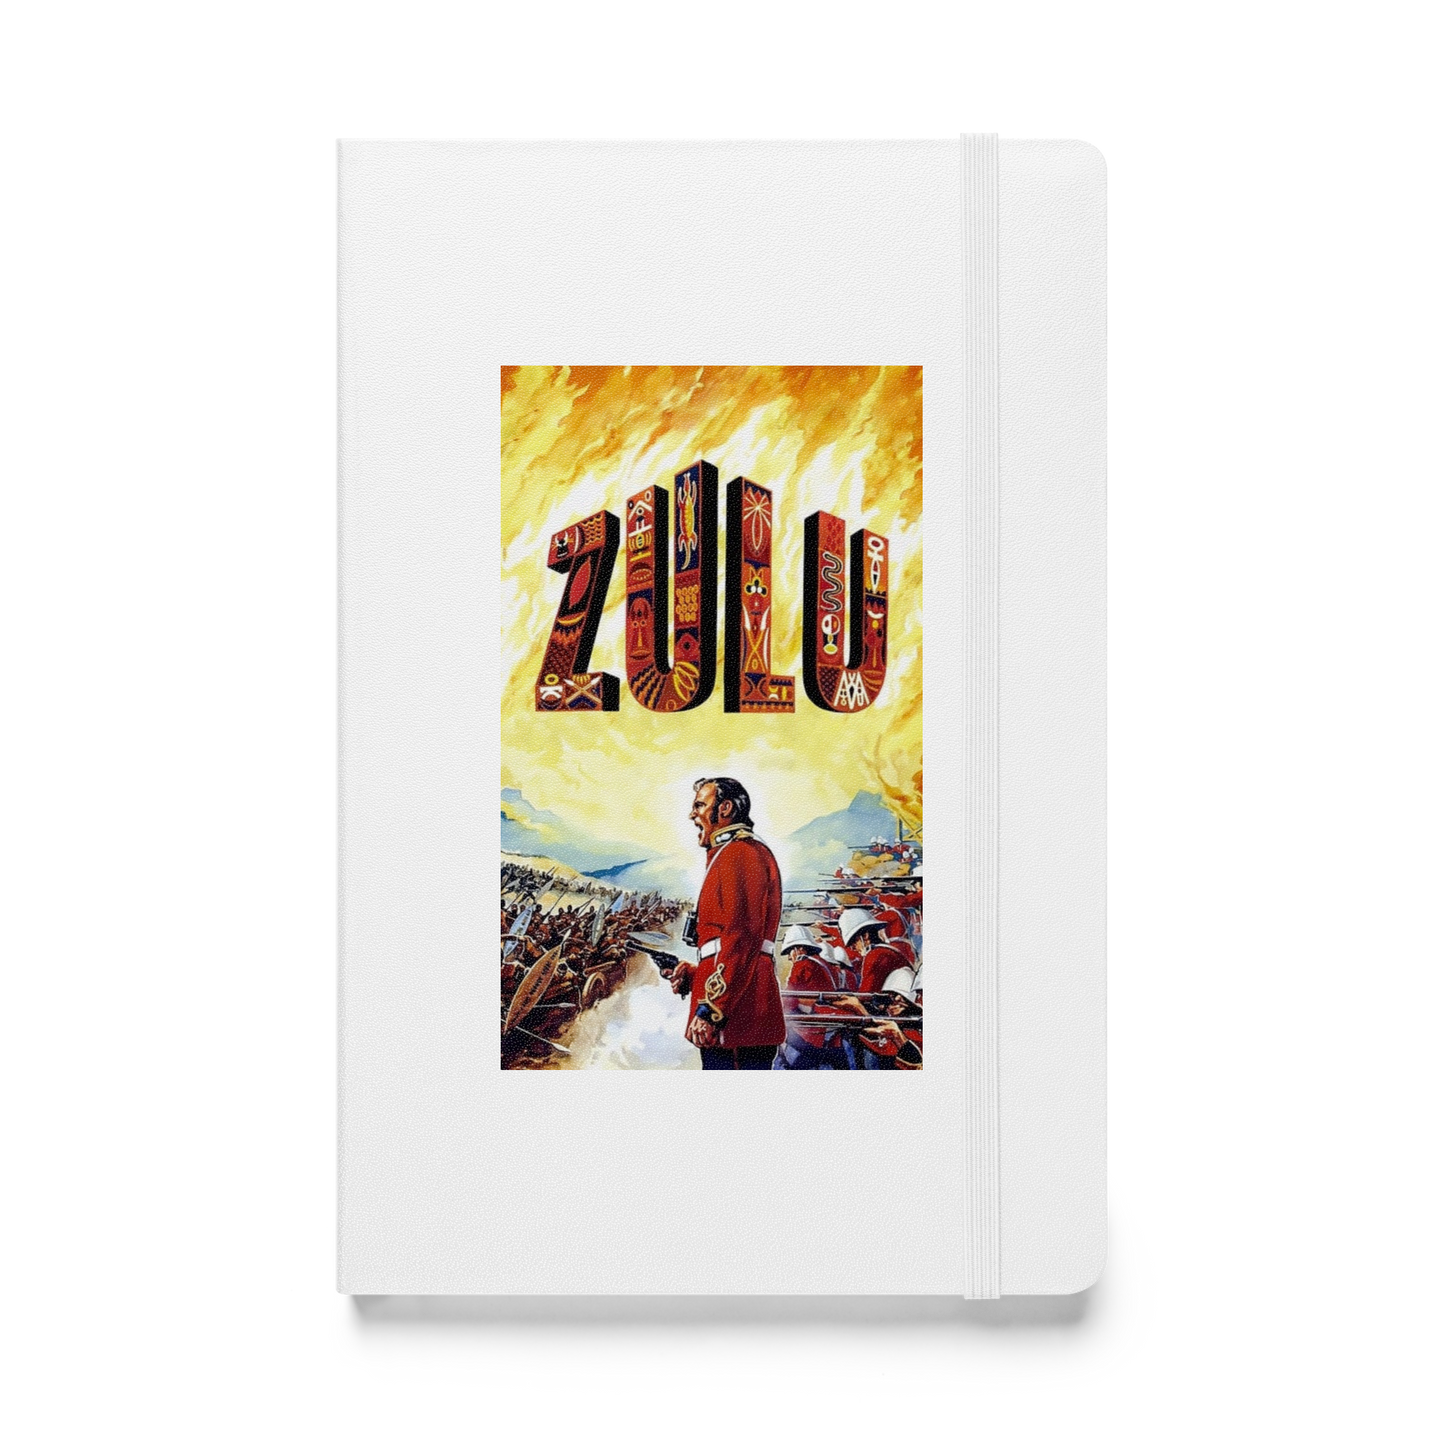 ZULU Poster (Hardcover bound notebook)